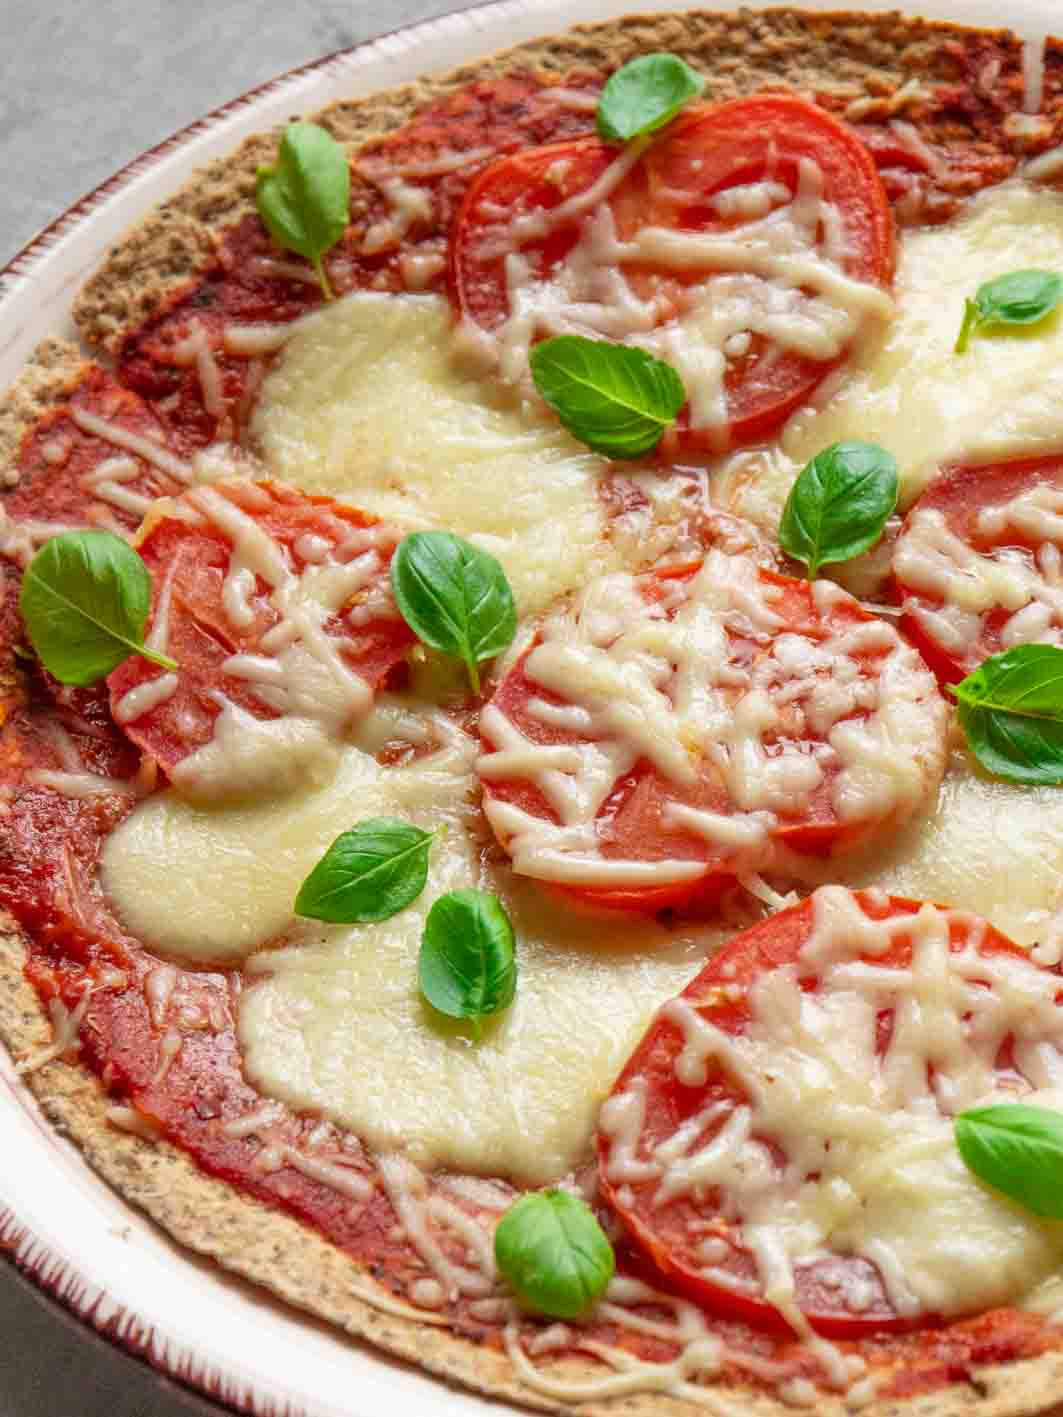 Rezepte mit wenig Zutaten - Wrap Pizza kalorienarm